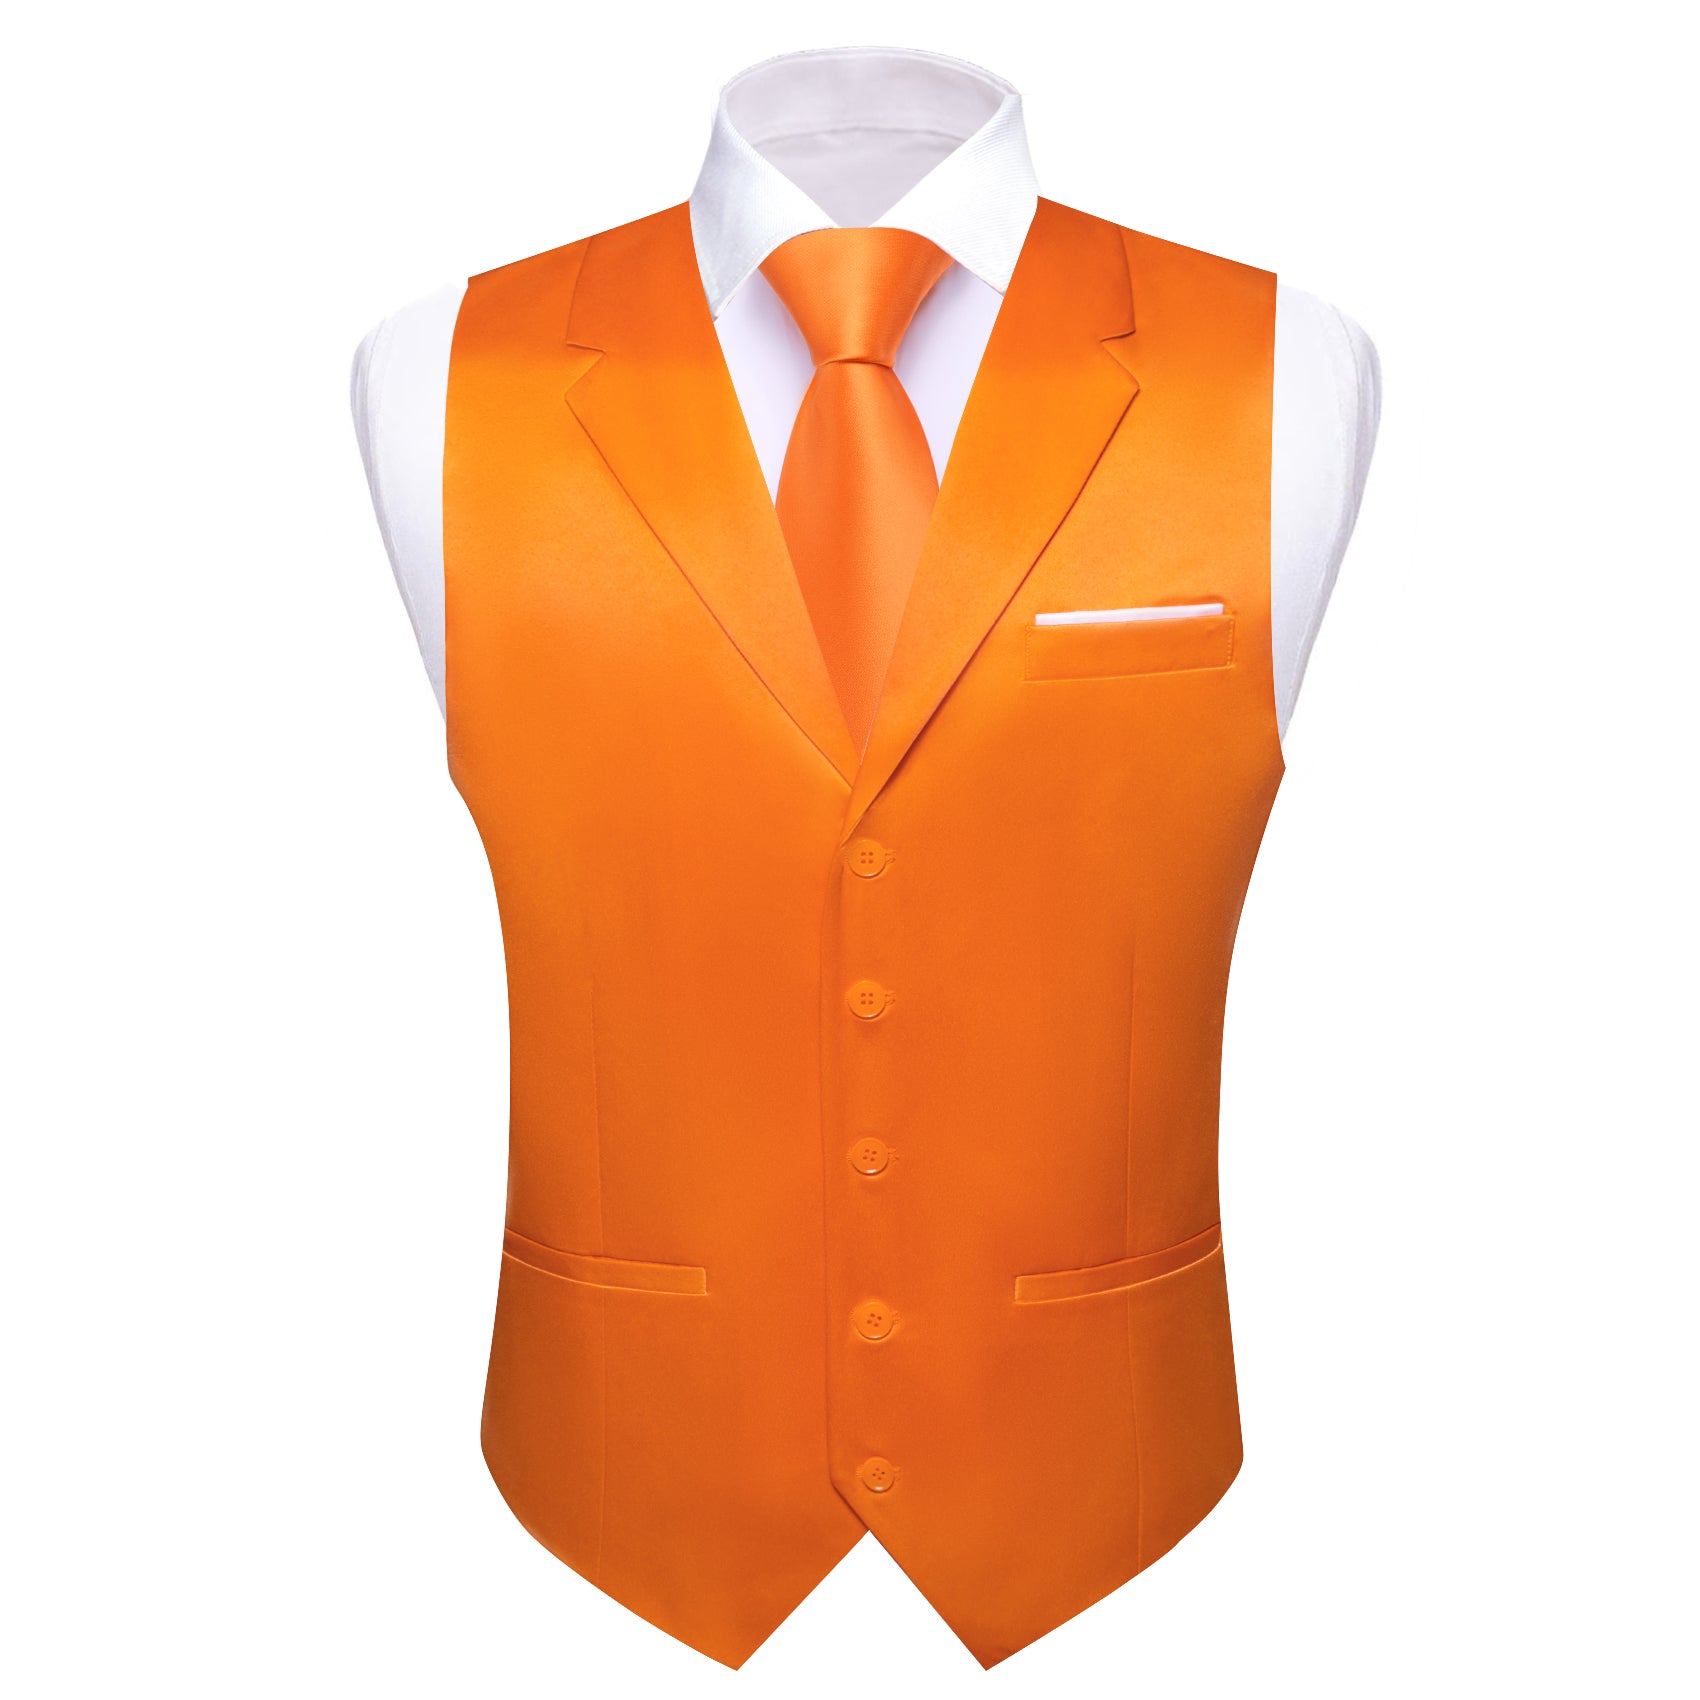 Barry.wang Men's Vest Orange Solid Silk Vest Notched Collar Waistcoat Set